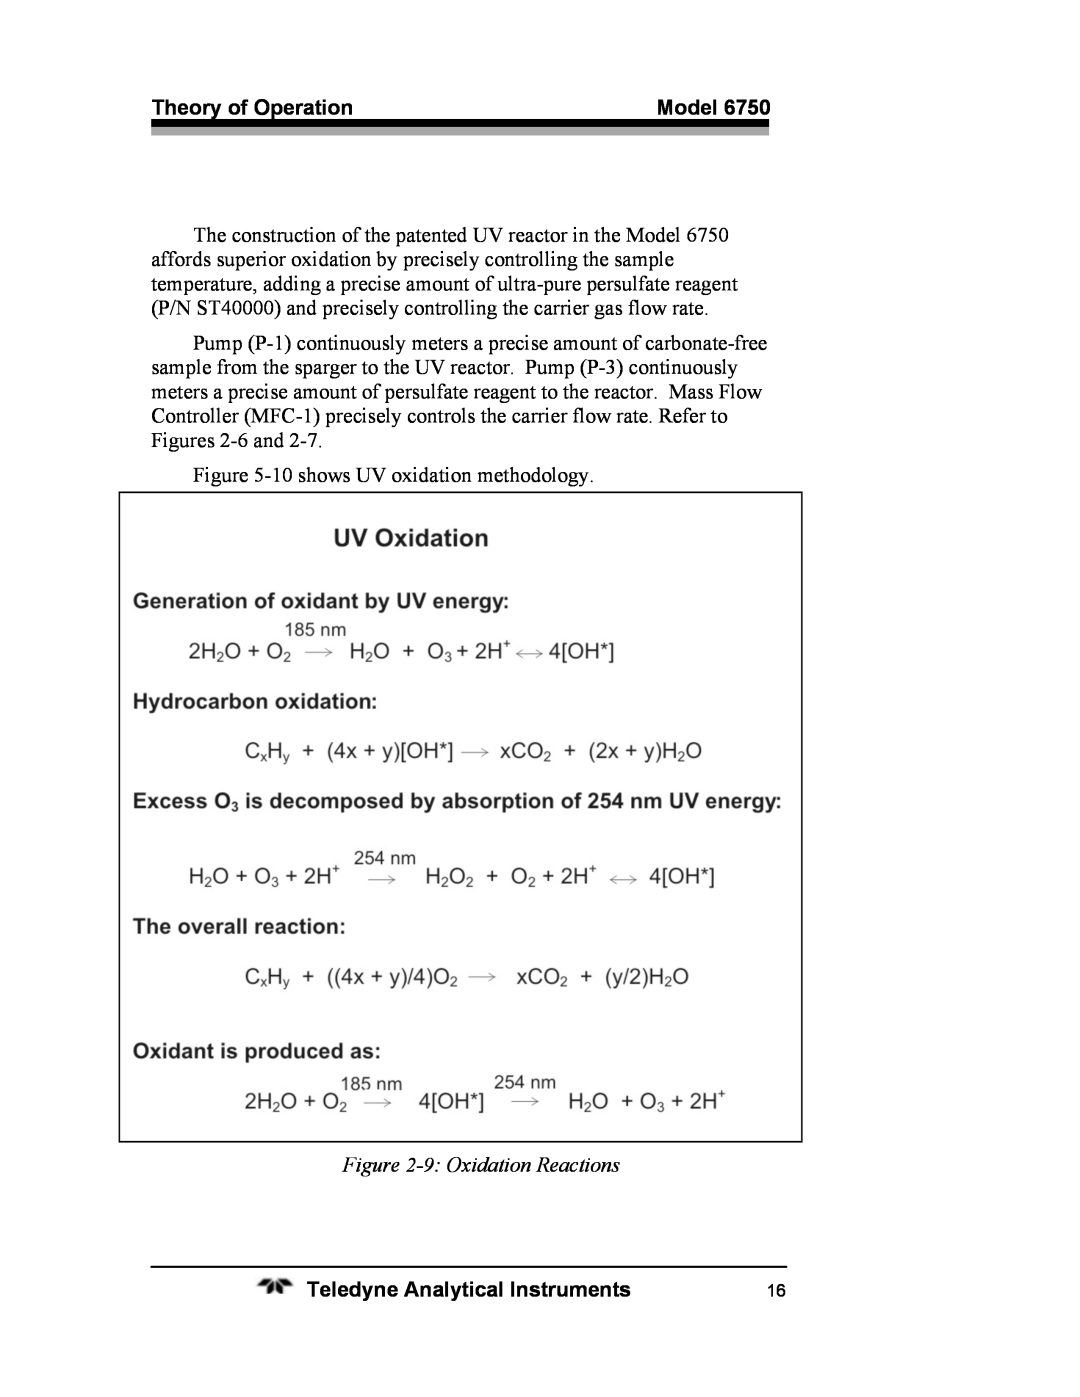 Teledyne 6750 operating instructions 9:Oxidation Reactions, 10shows UV oxidation methodology 